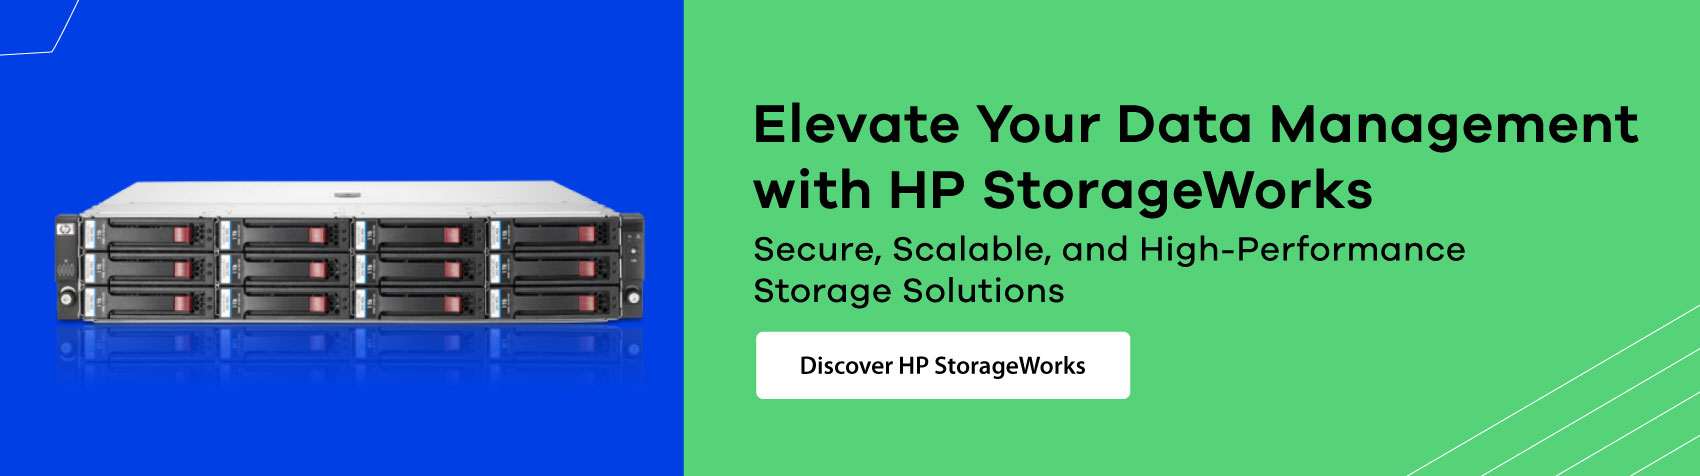 HP-StorageWorks